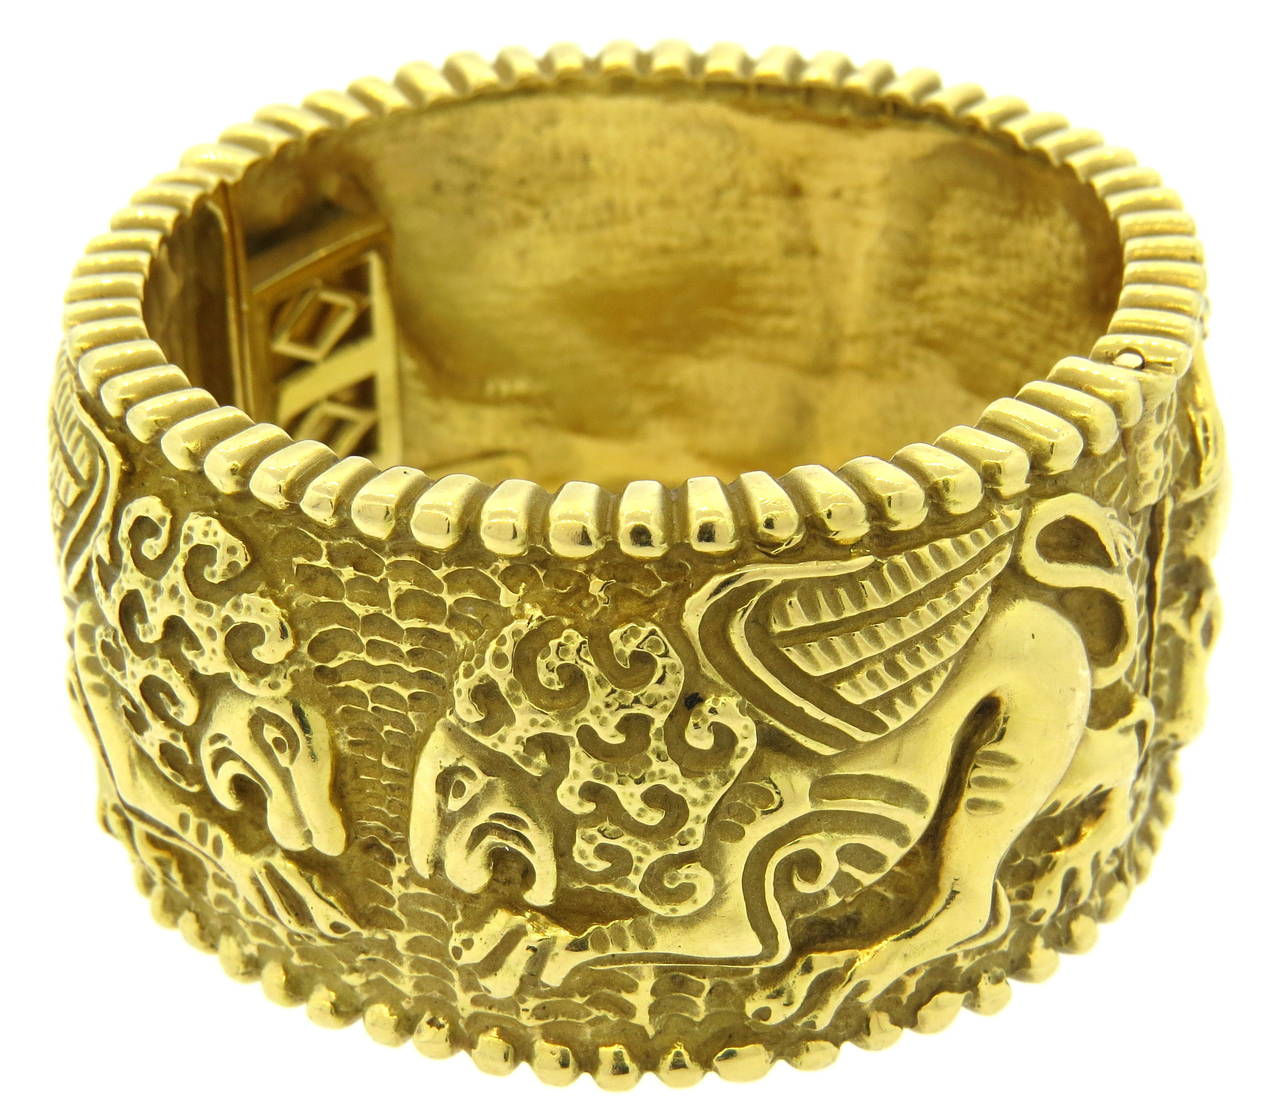 Massive bangle bracelet in 18k gold, featuring lion design, bracelet will fit up to 7